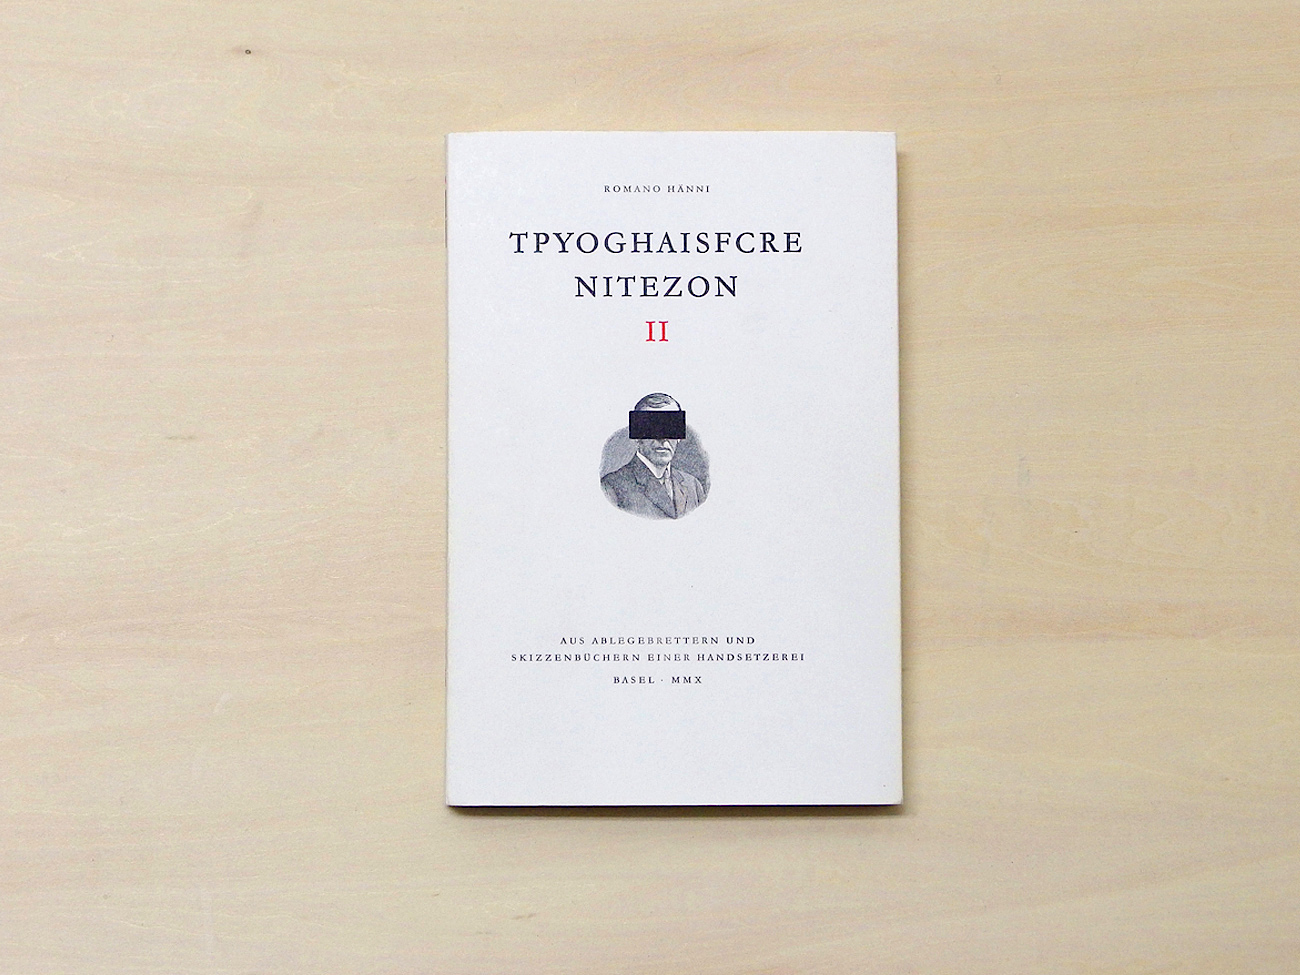 Exhibition Romano Hänni_typographic note II at print gallery tokyo